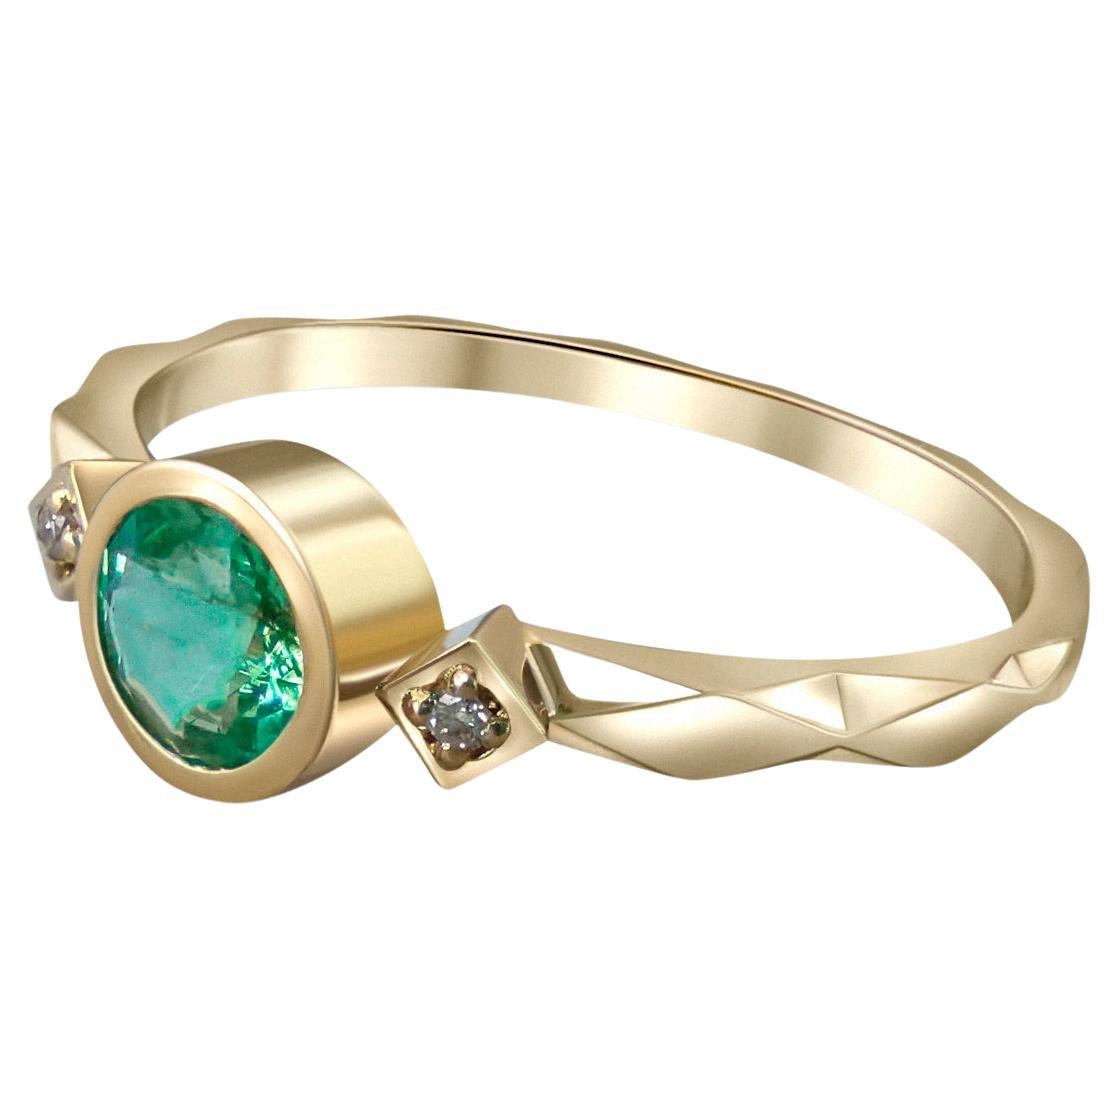 Smaragd 14k Gold Ring. 